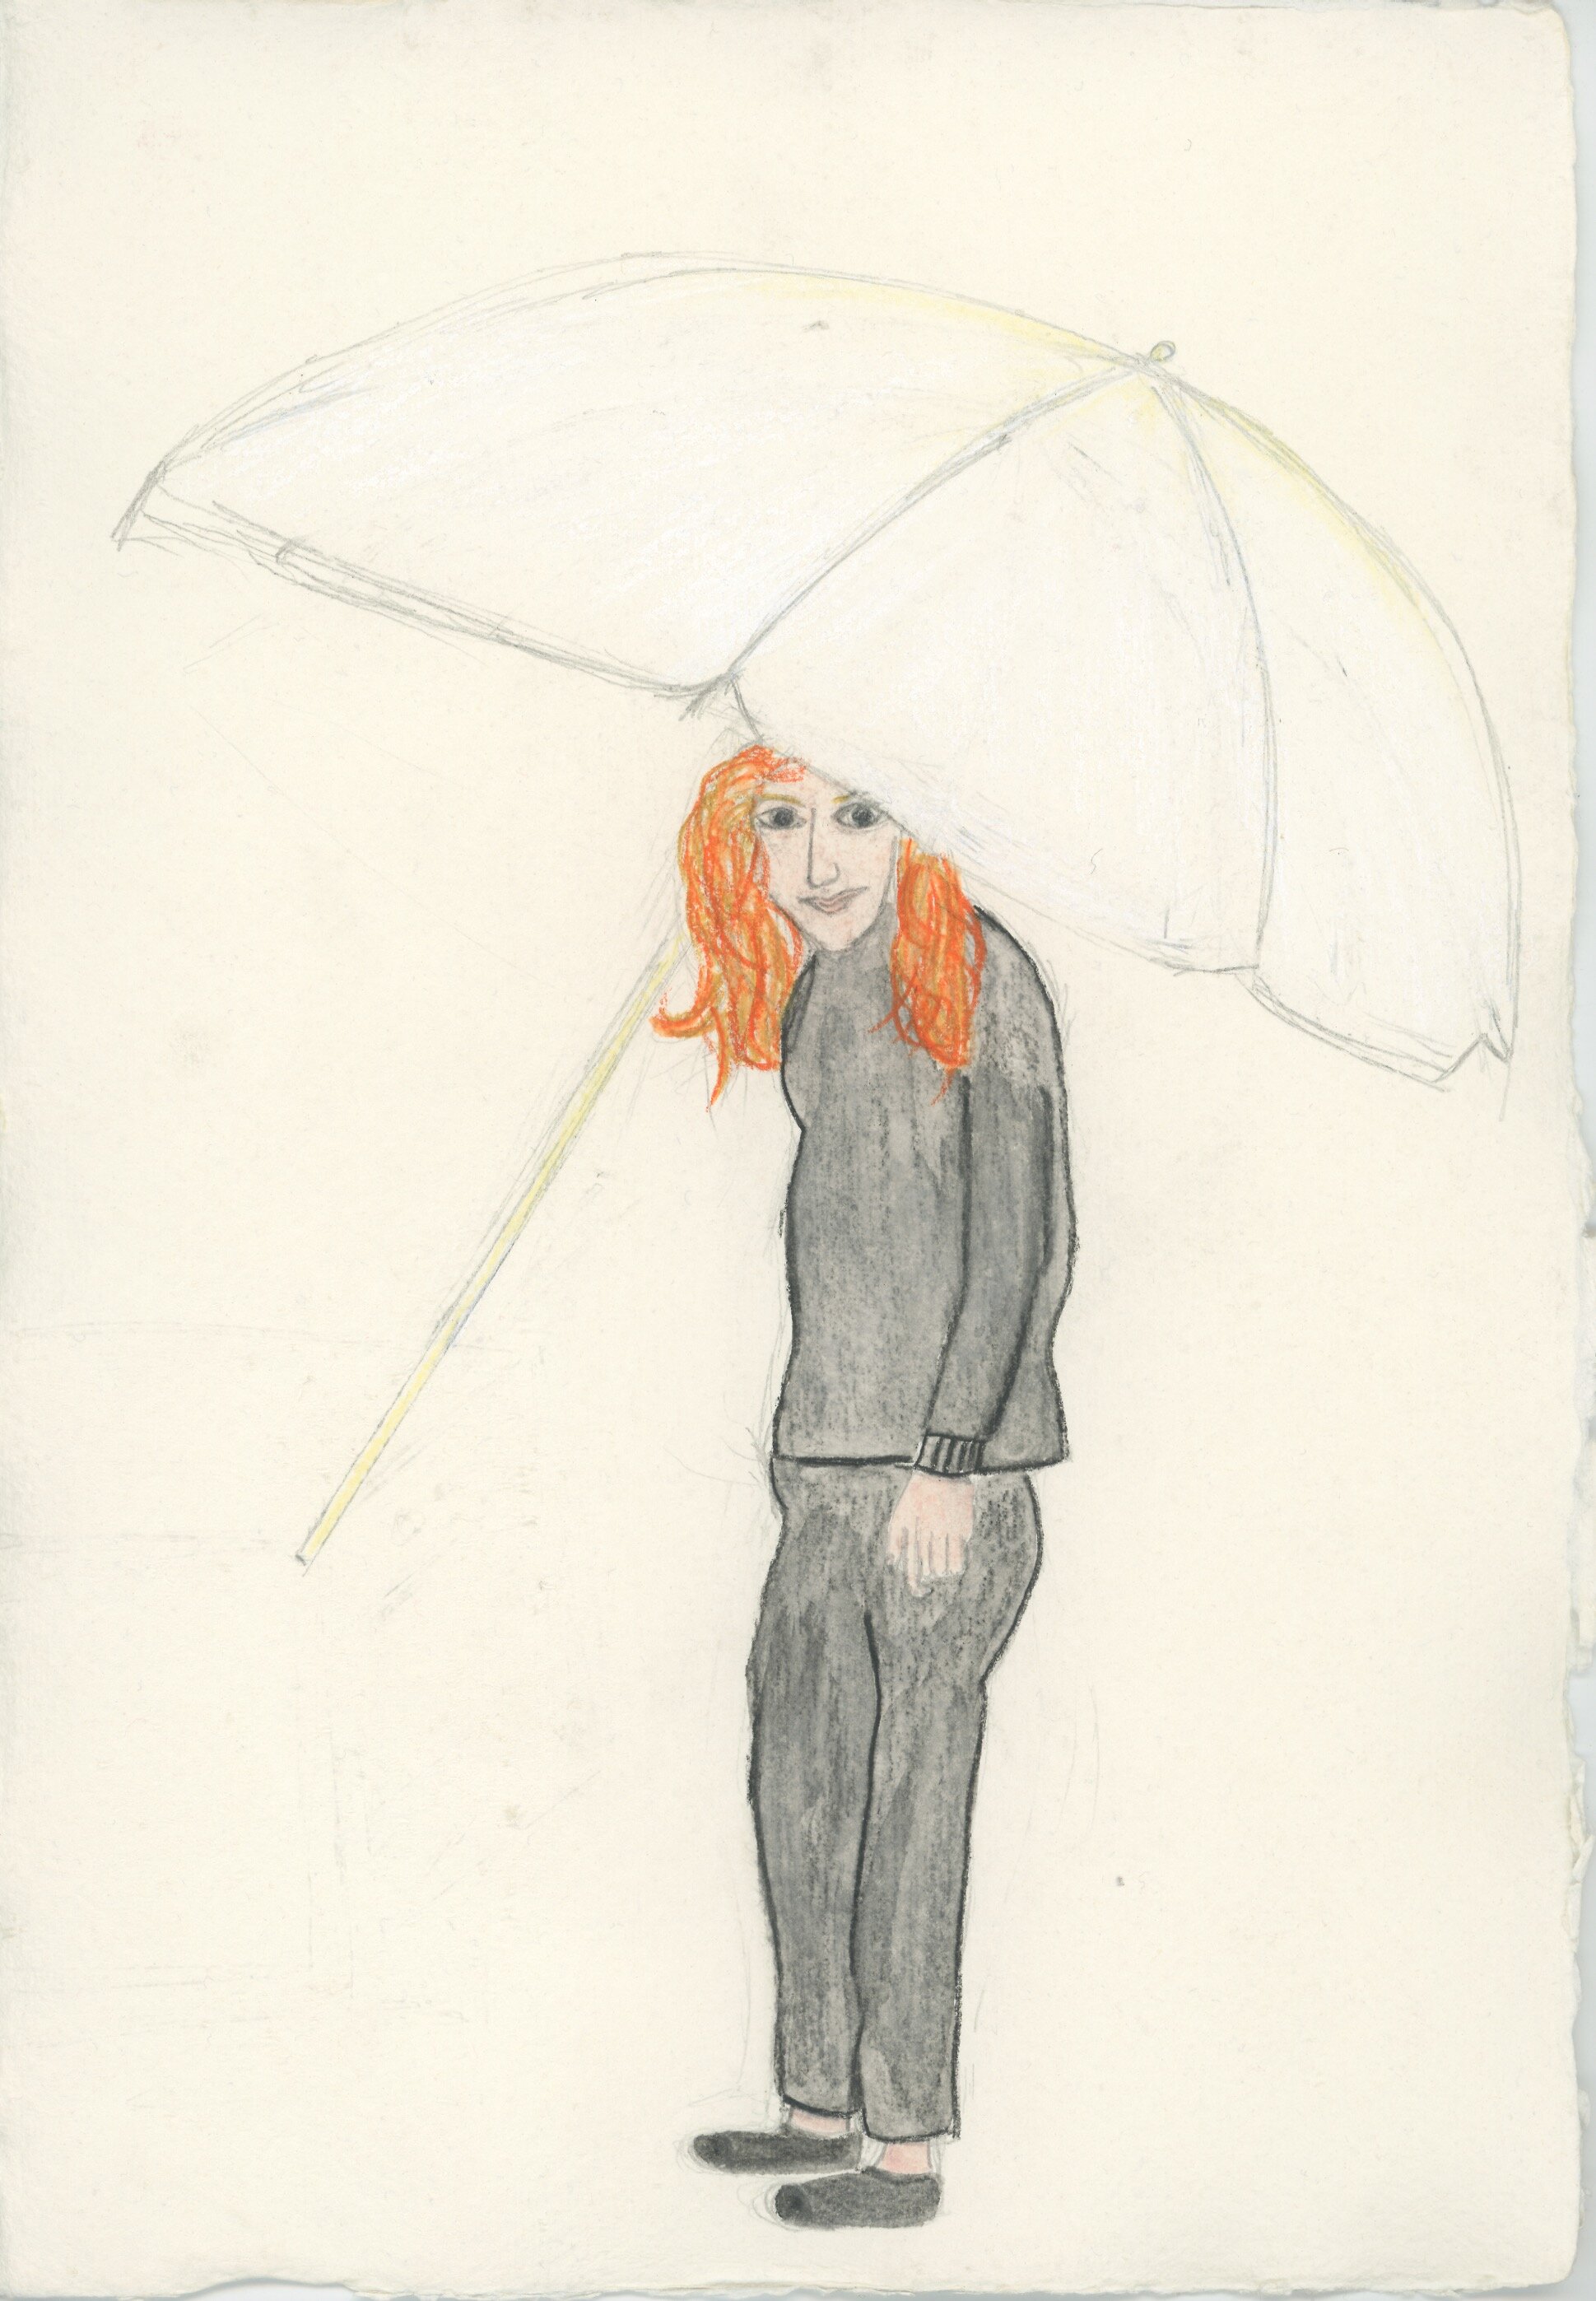 Woman holding a parasol on a rainy day, 25.5 x 30 cm, 2019